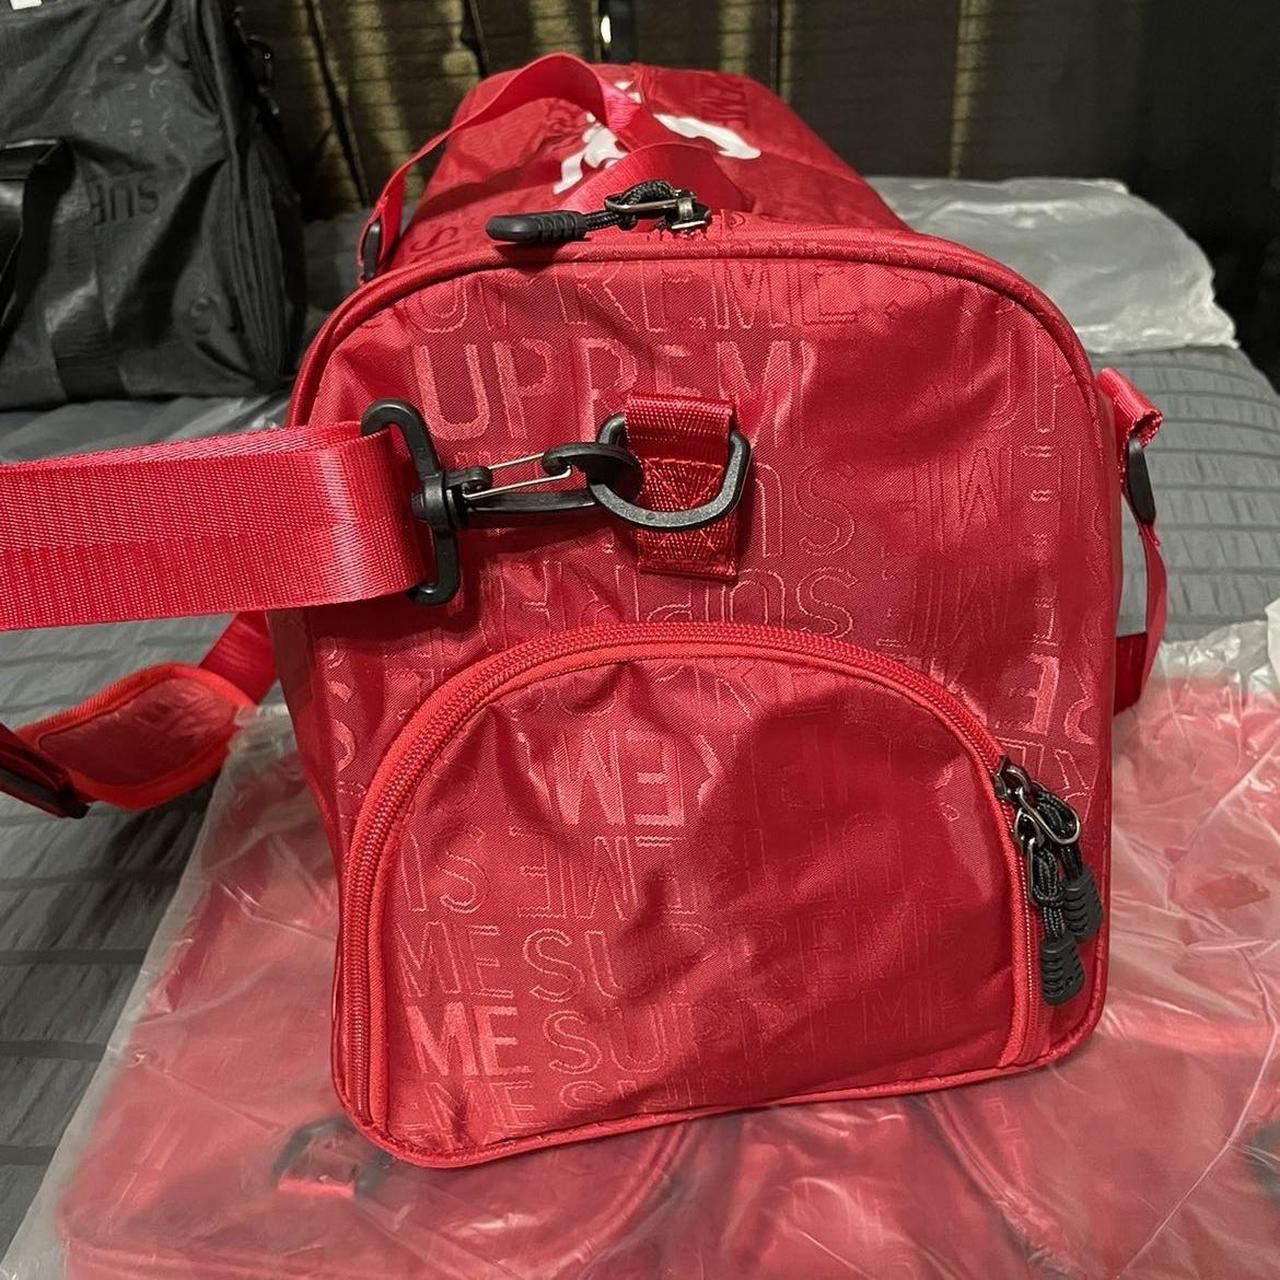 supreme red duffle bag FW17 DM offers - Depop